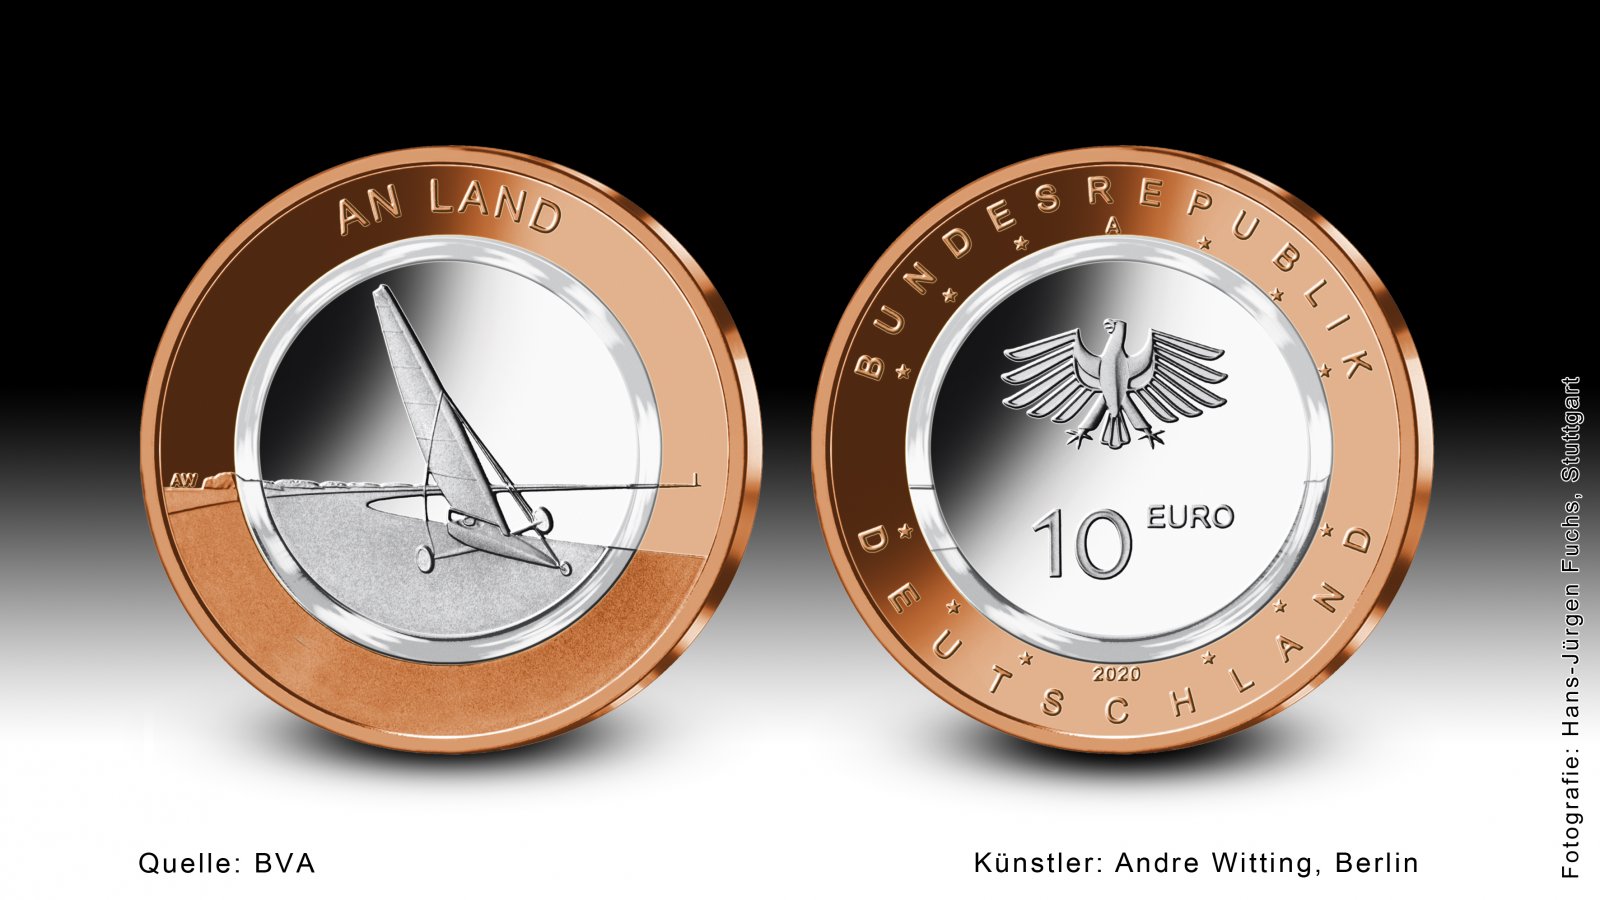 Download 10 euro collector coin 2020 "An Land" 